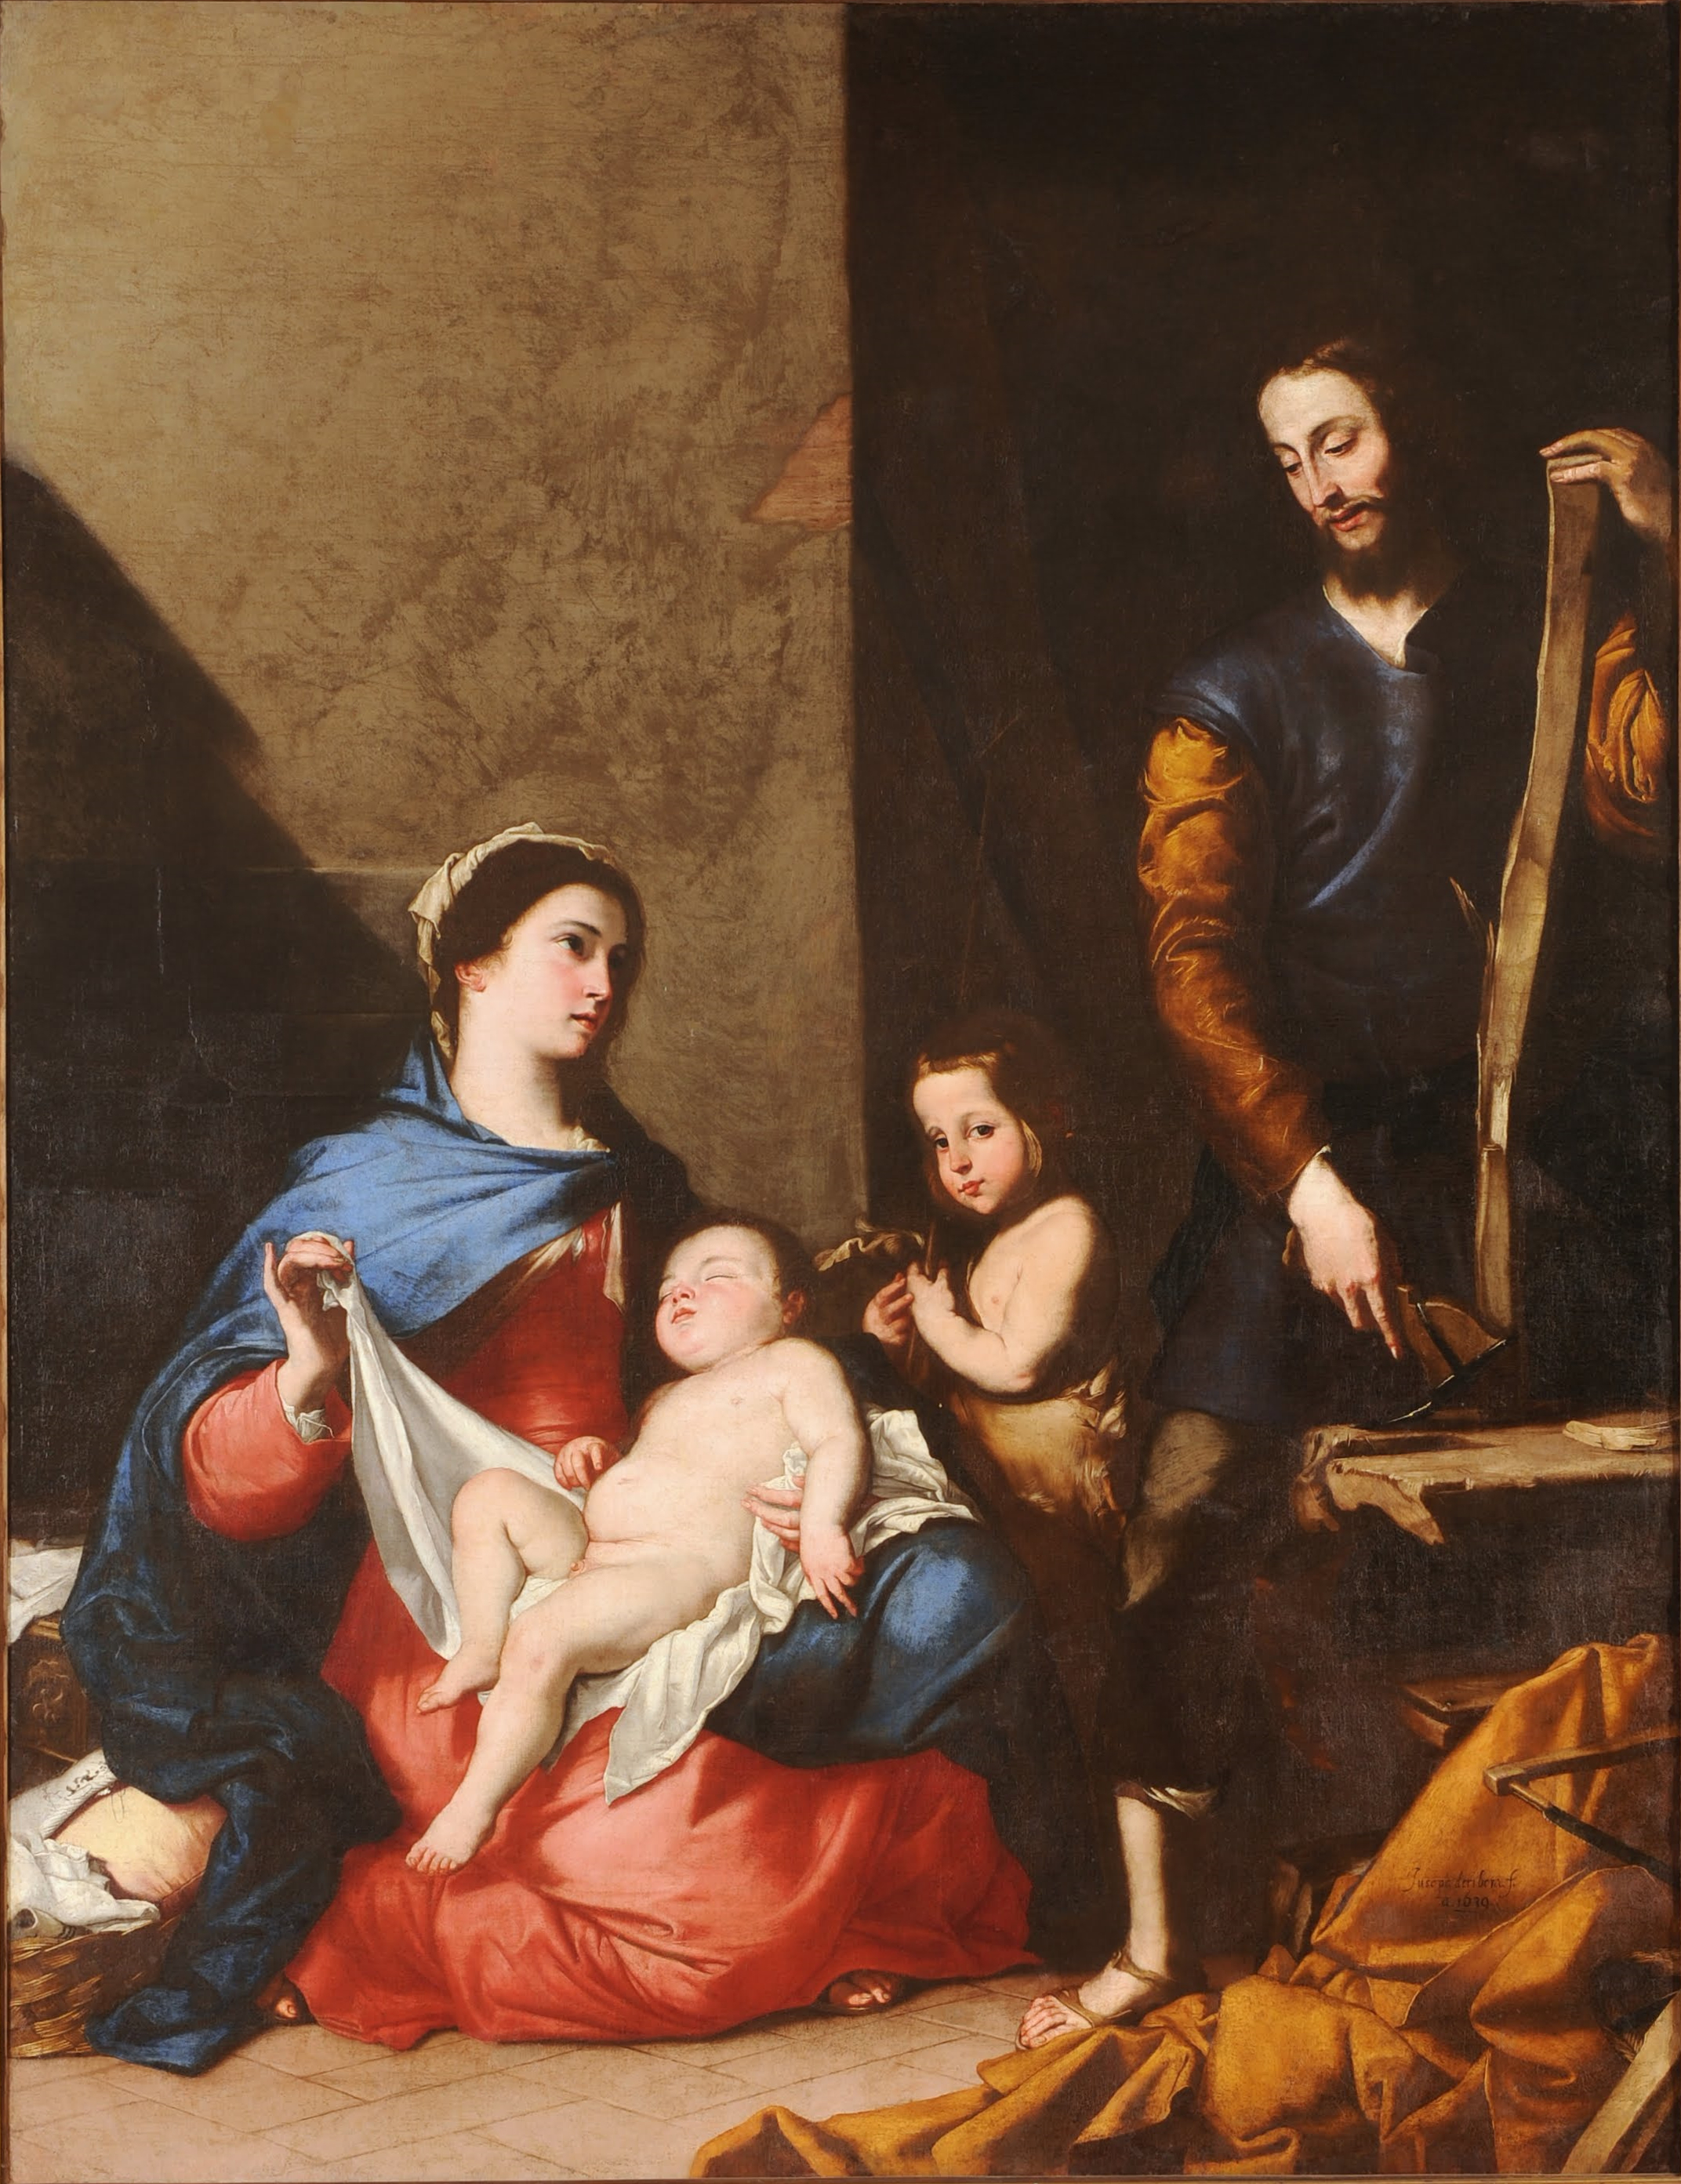 Jose de Ribera, el Espanoleto - The Sacred Family - Google Art Project